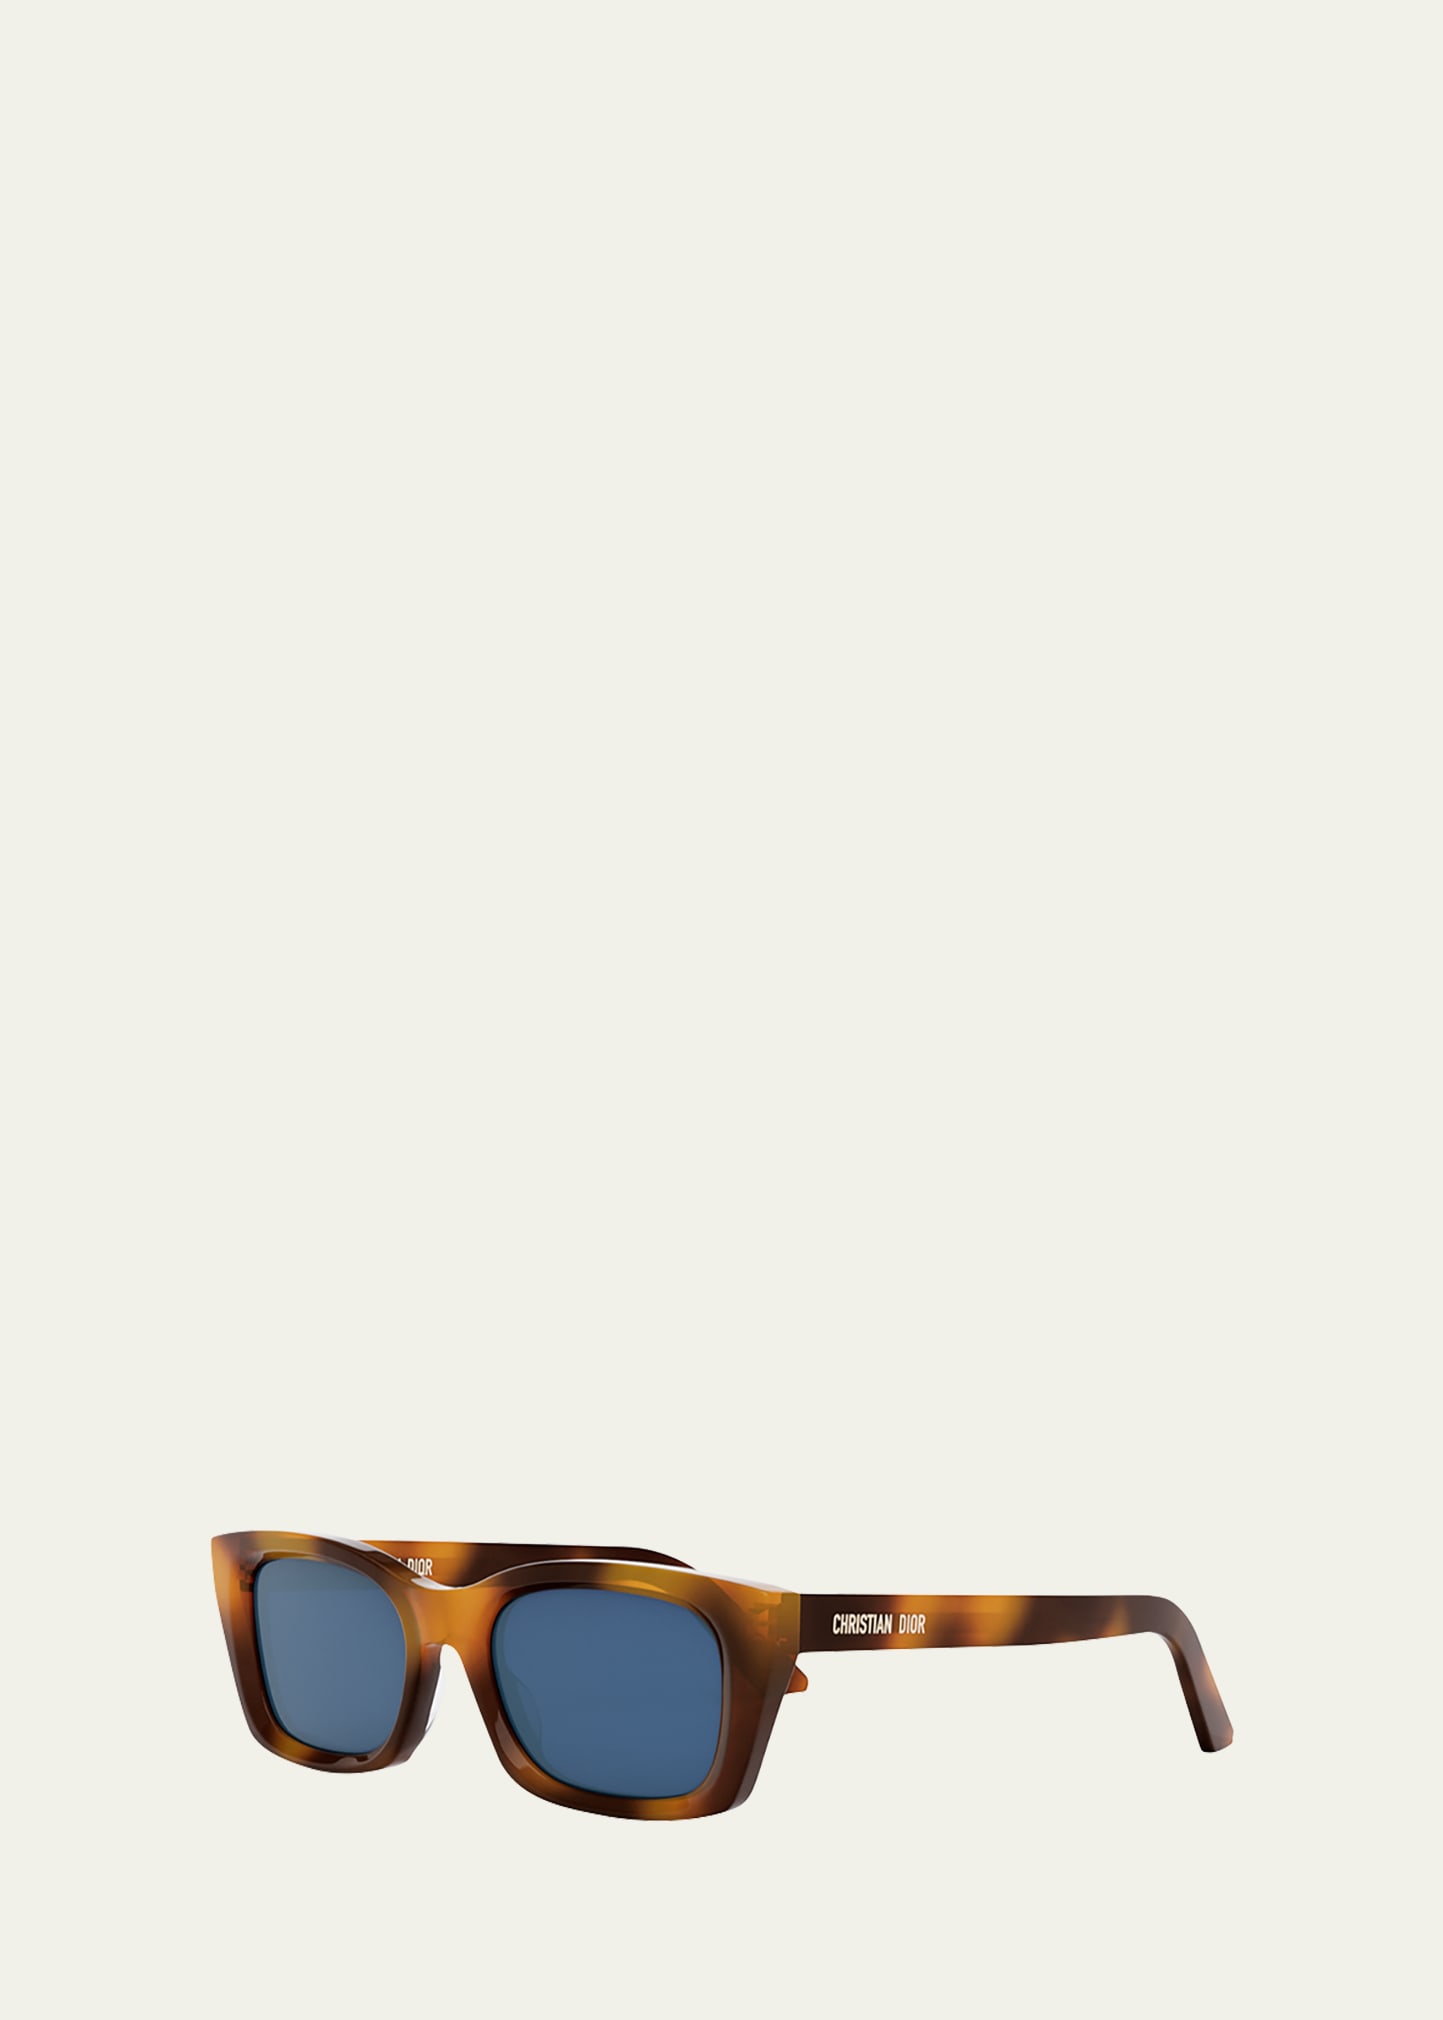 DiorMidnight S3I Sunglasses